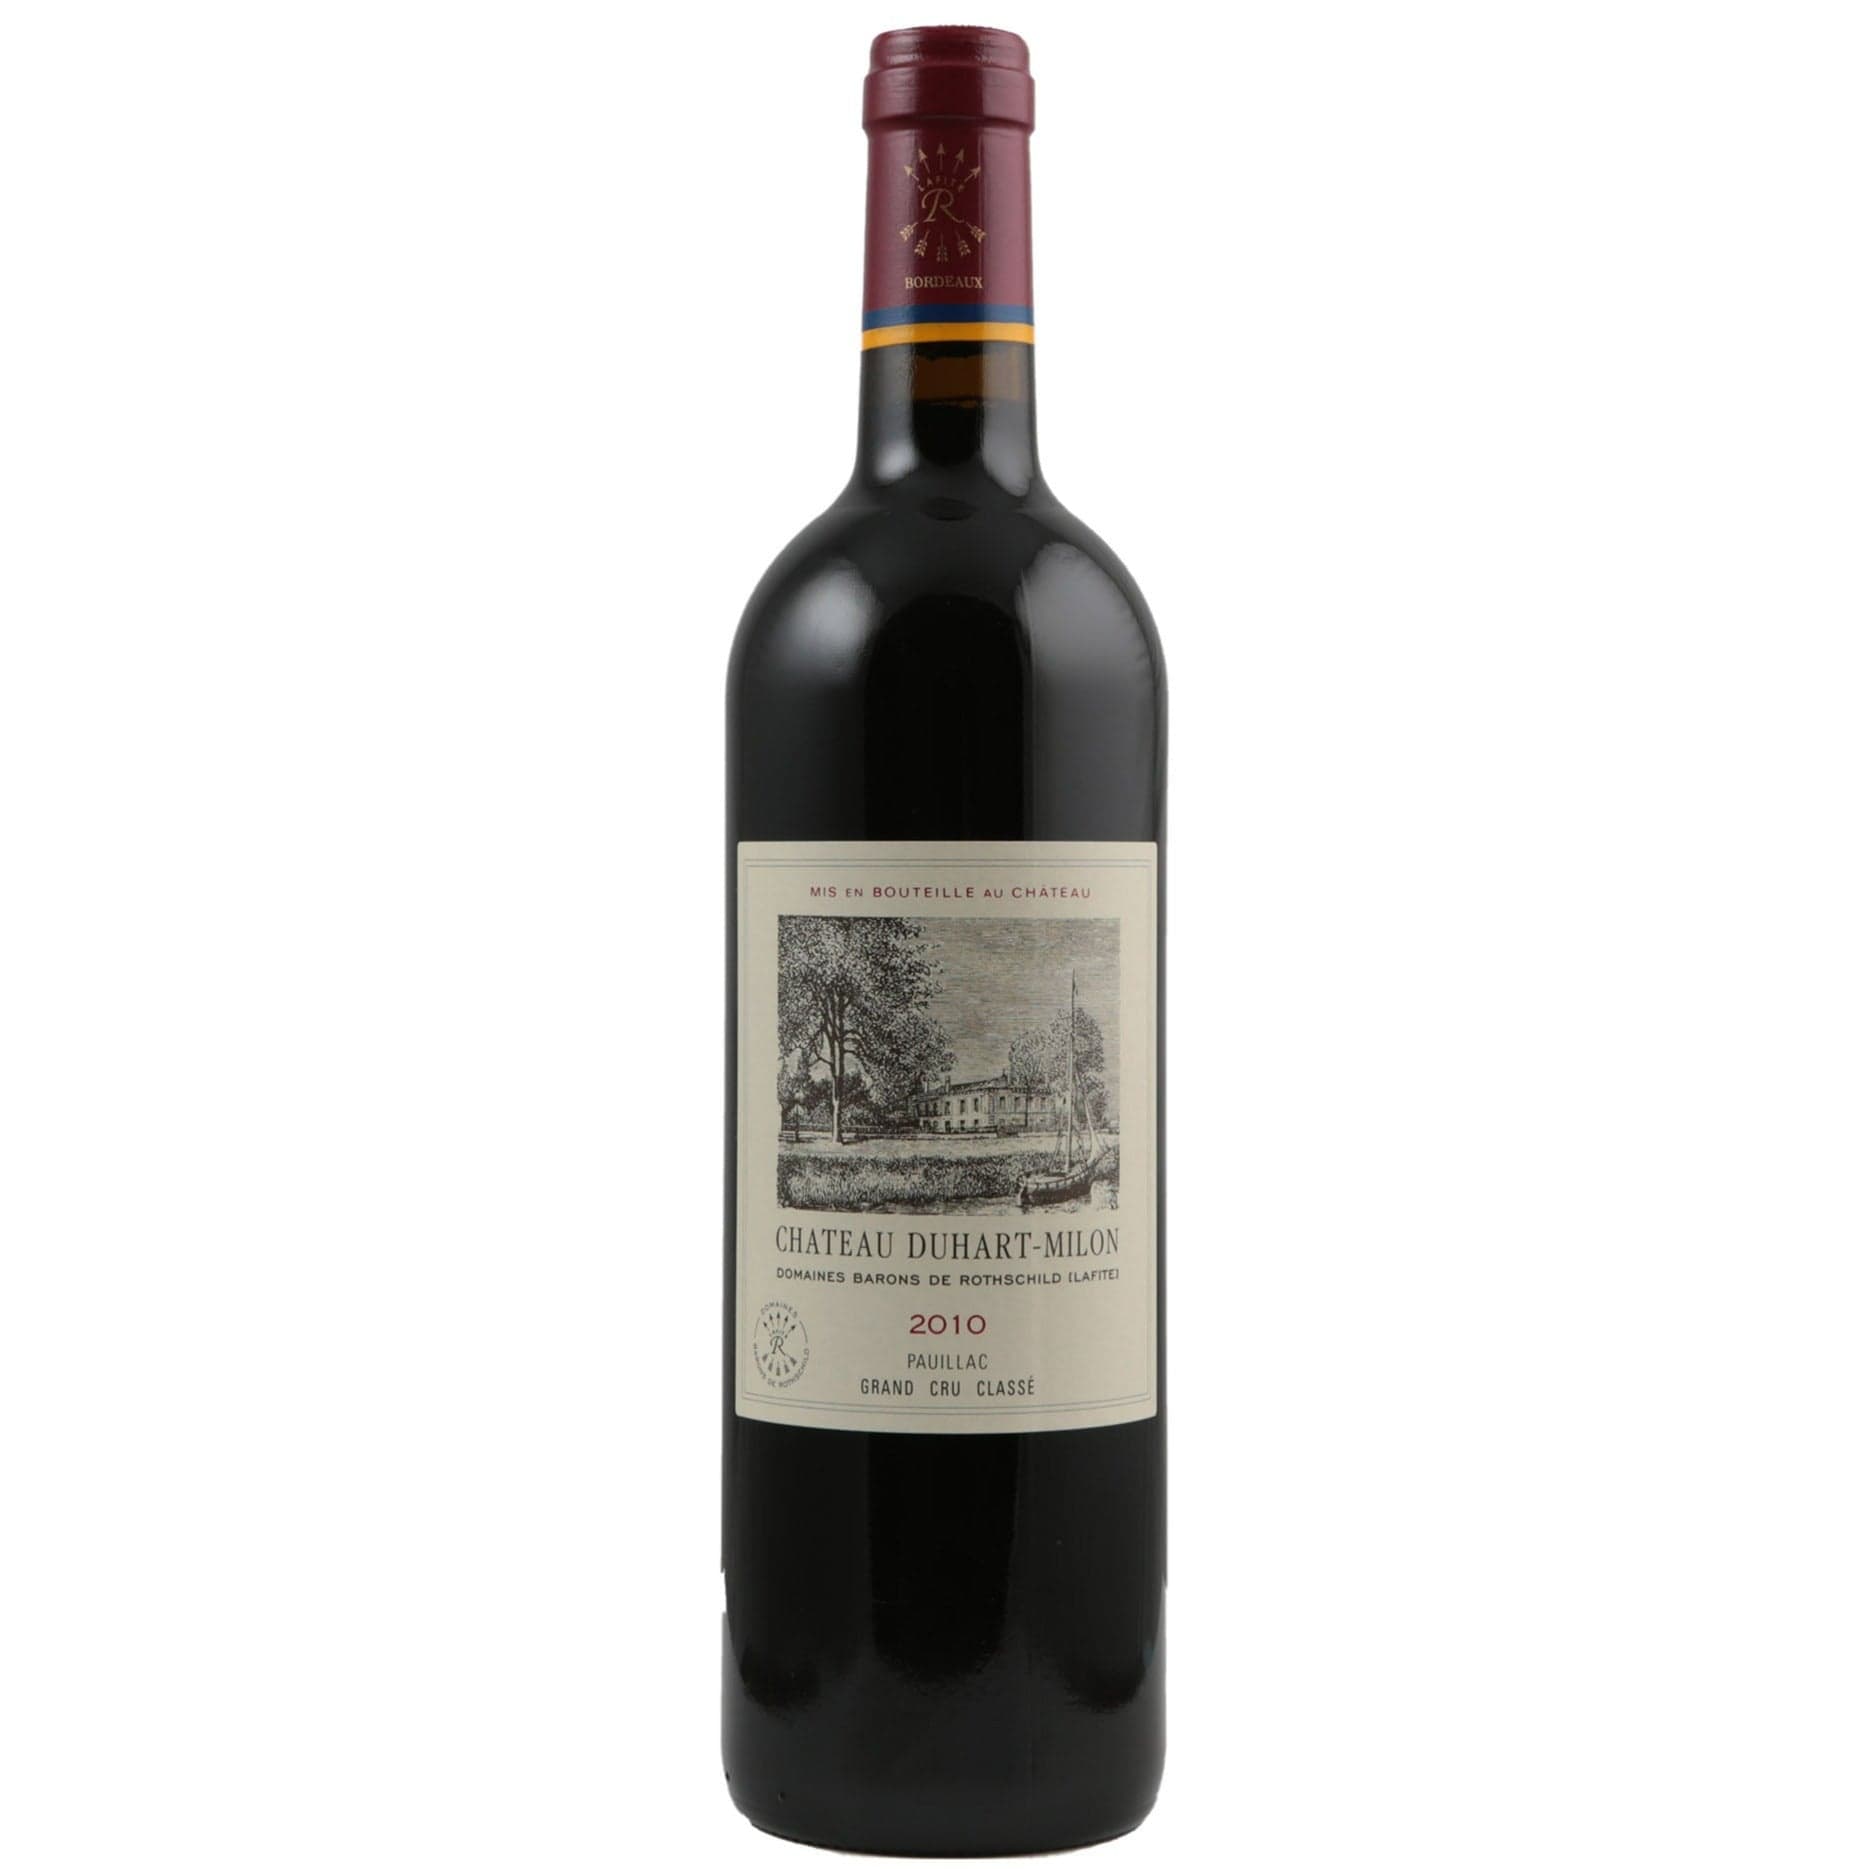 Single bottle of Red wine Ch. Duhart-Milon, 4th Growth Grand Cru Classe, Pauillac, 2010 73% Cabernet Sauvignon & 27% Merlot